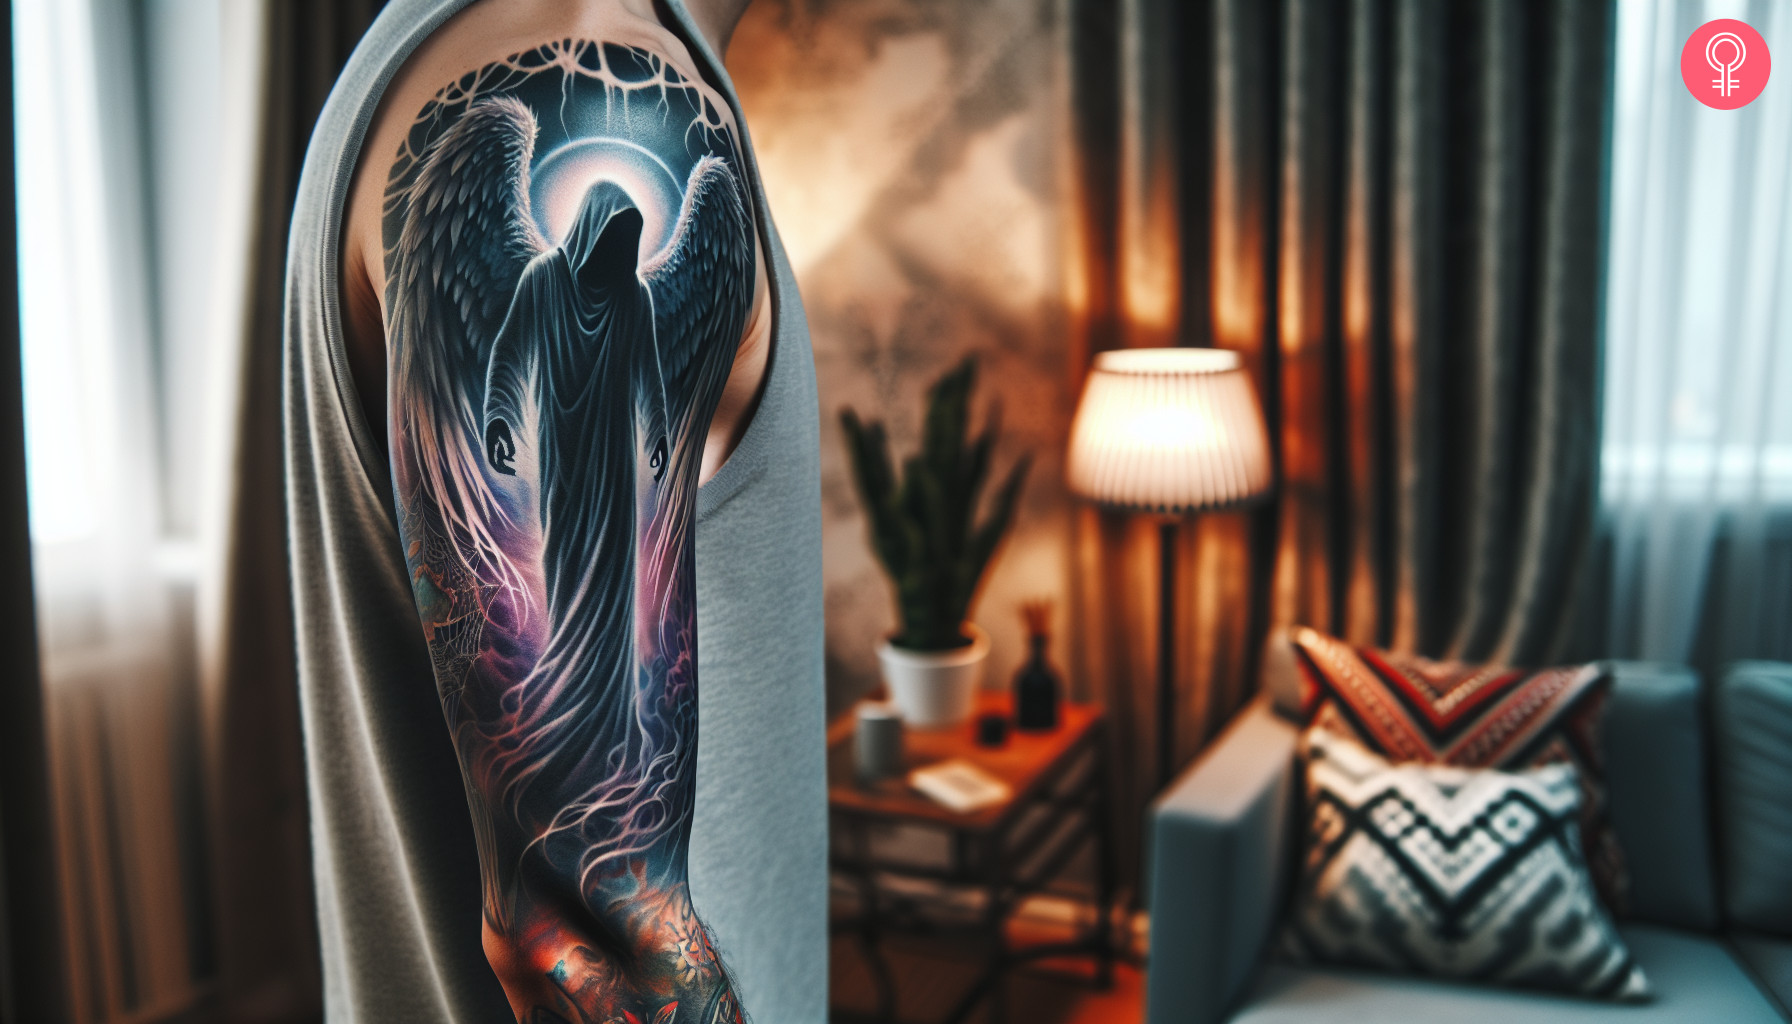 An angel of death sleeve tattoo on the arm